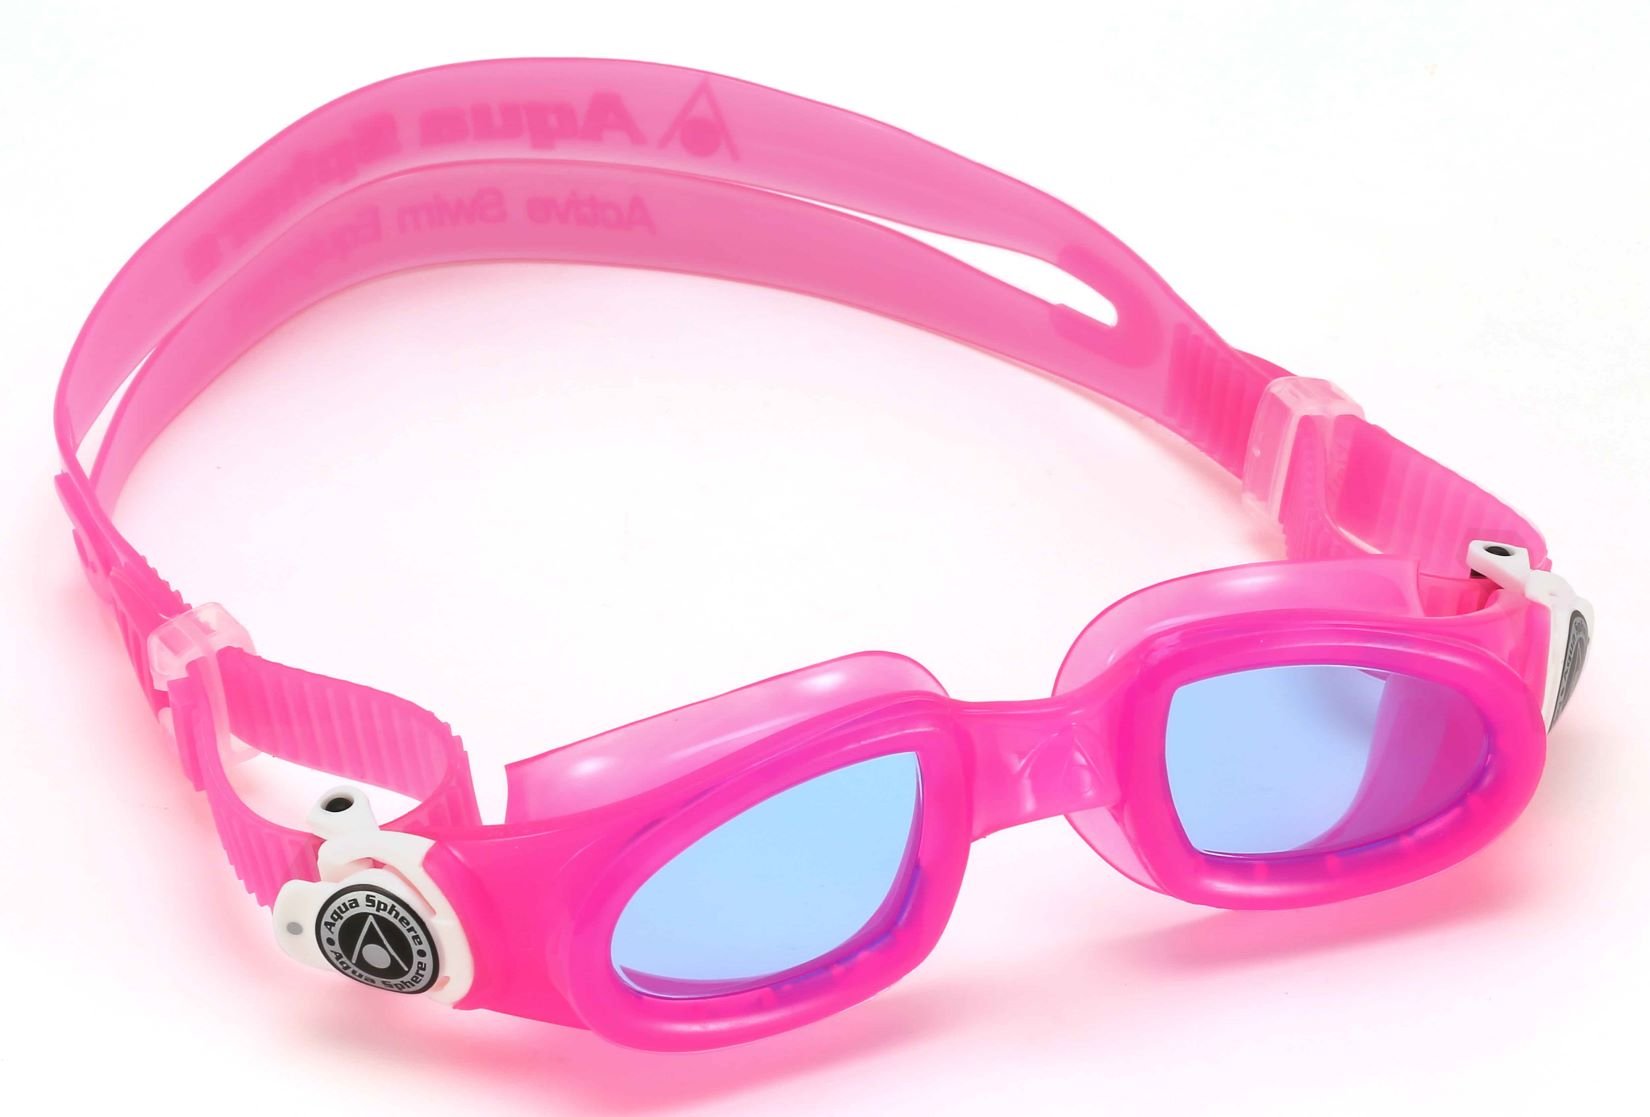 Detské plavecké okuliare - MOBY KID